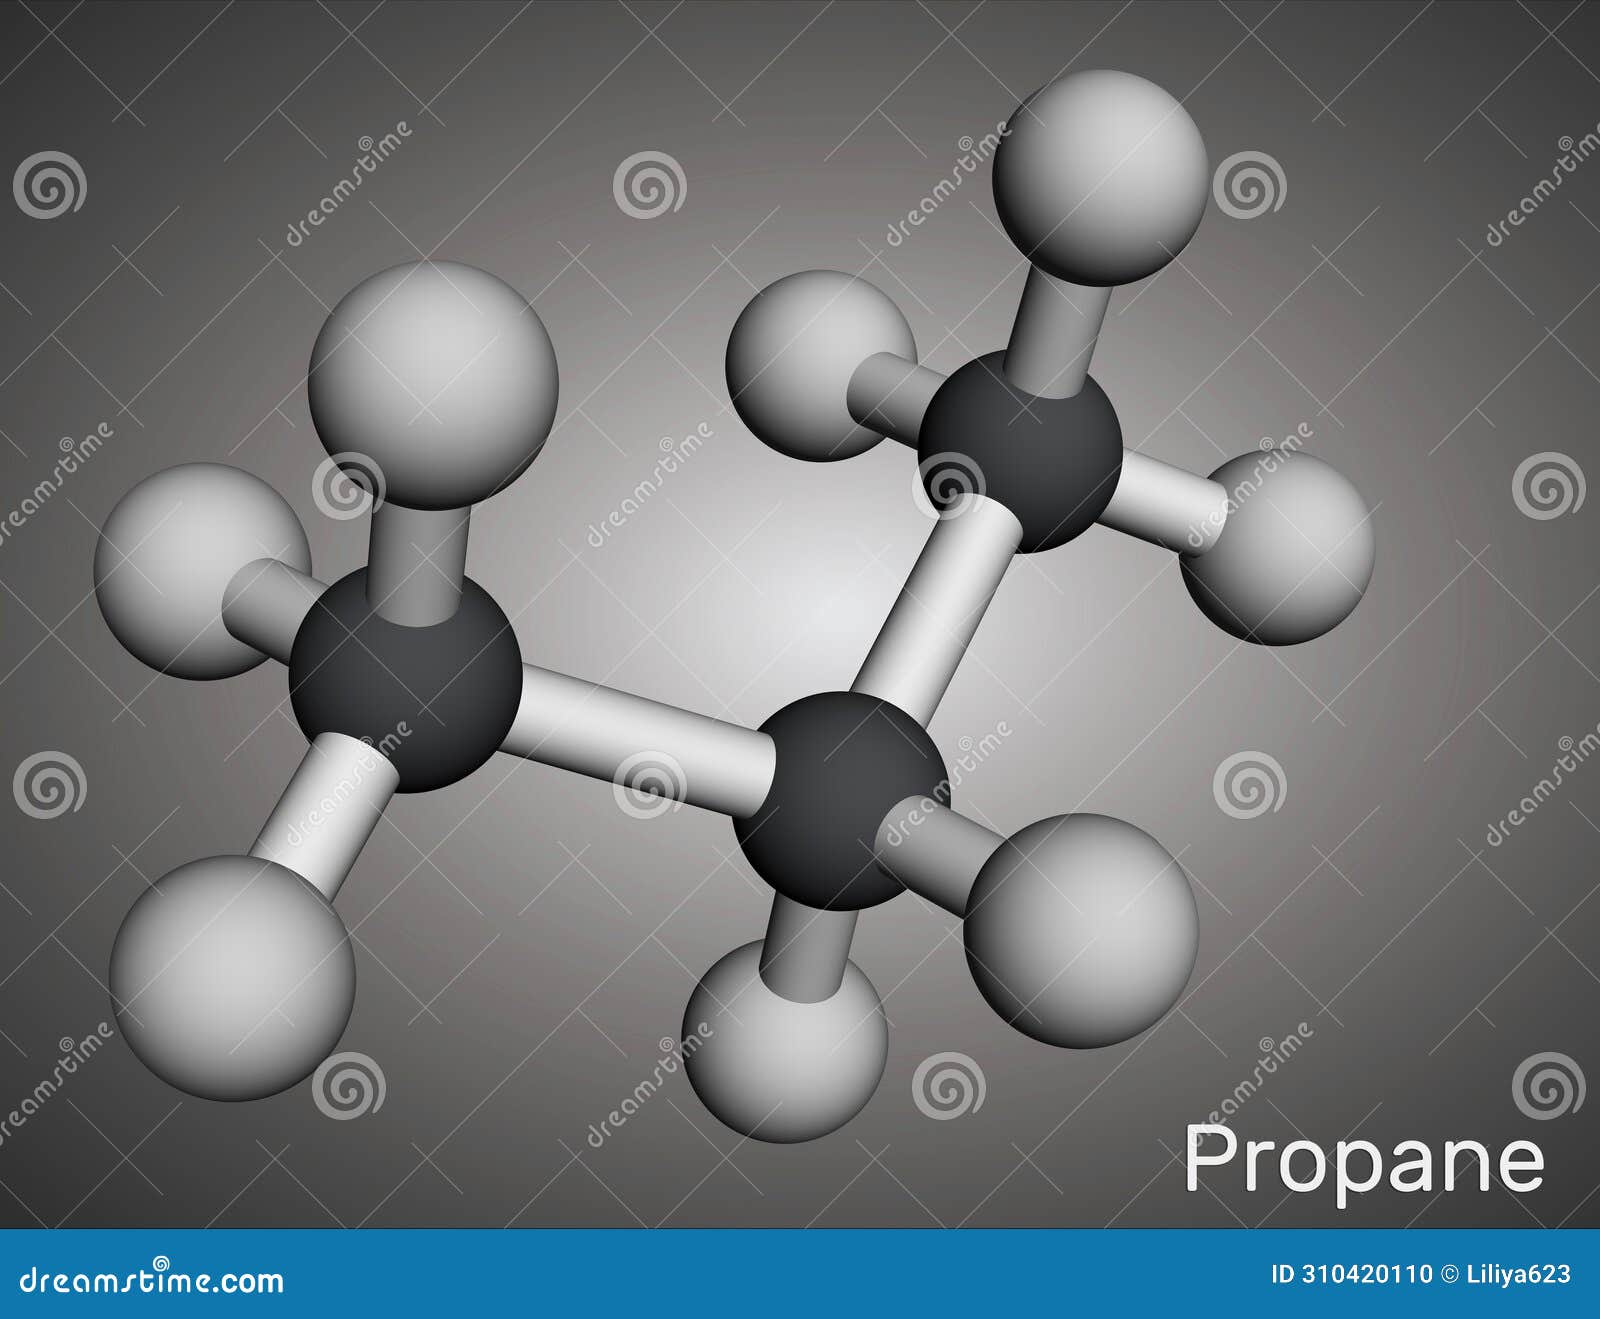 propane c3h8 molecule. it is three-carbon alkane, molecular model. 3d rendering